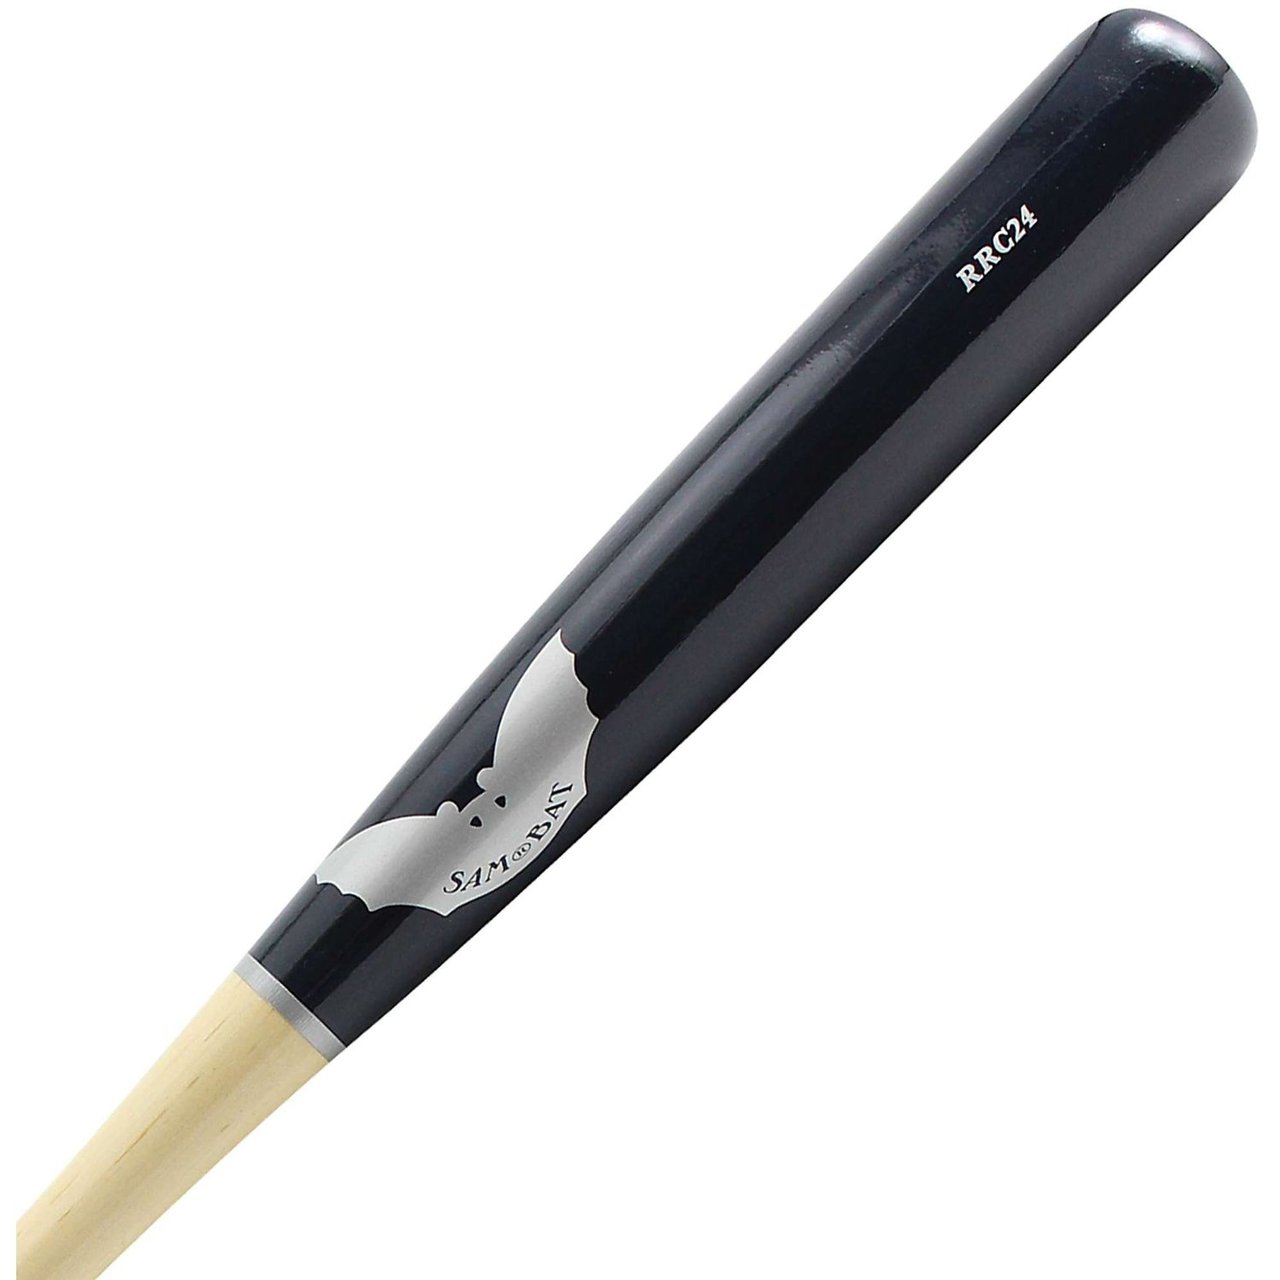 sam-bat-robinson-cano-rrc24-maple-wood-baseball-bat-32-inch RRC24-32inch  883496004826 Robinson Cano Wood Maple Sam Bat. Sam Bats Select Stock bats